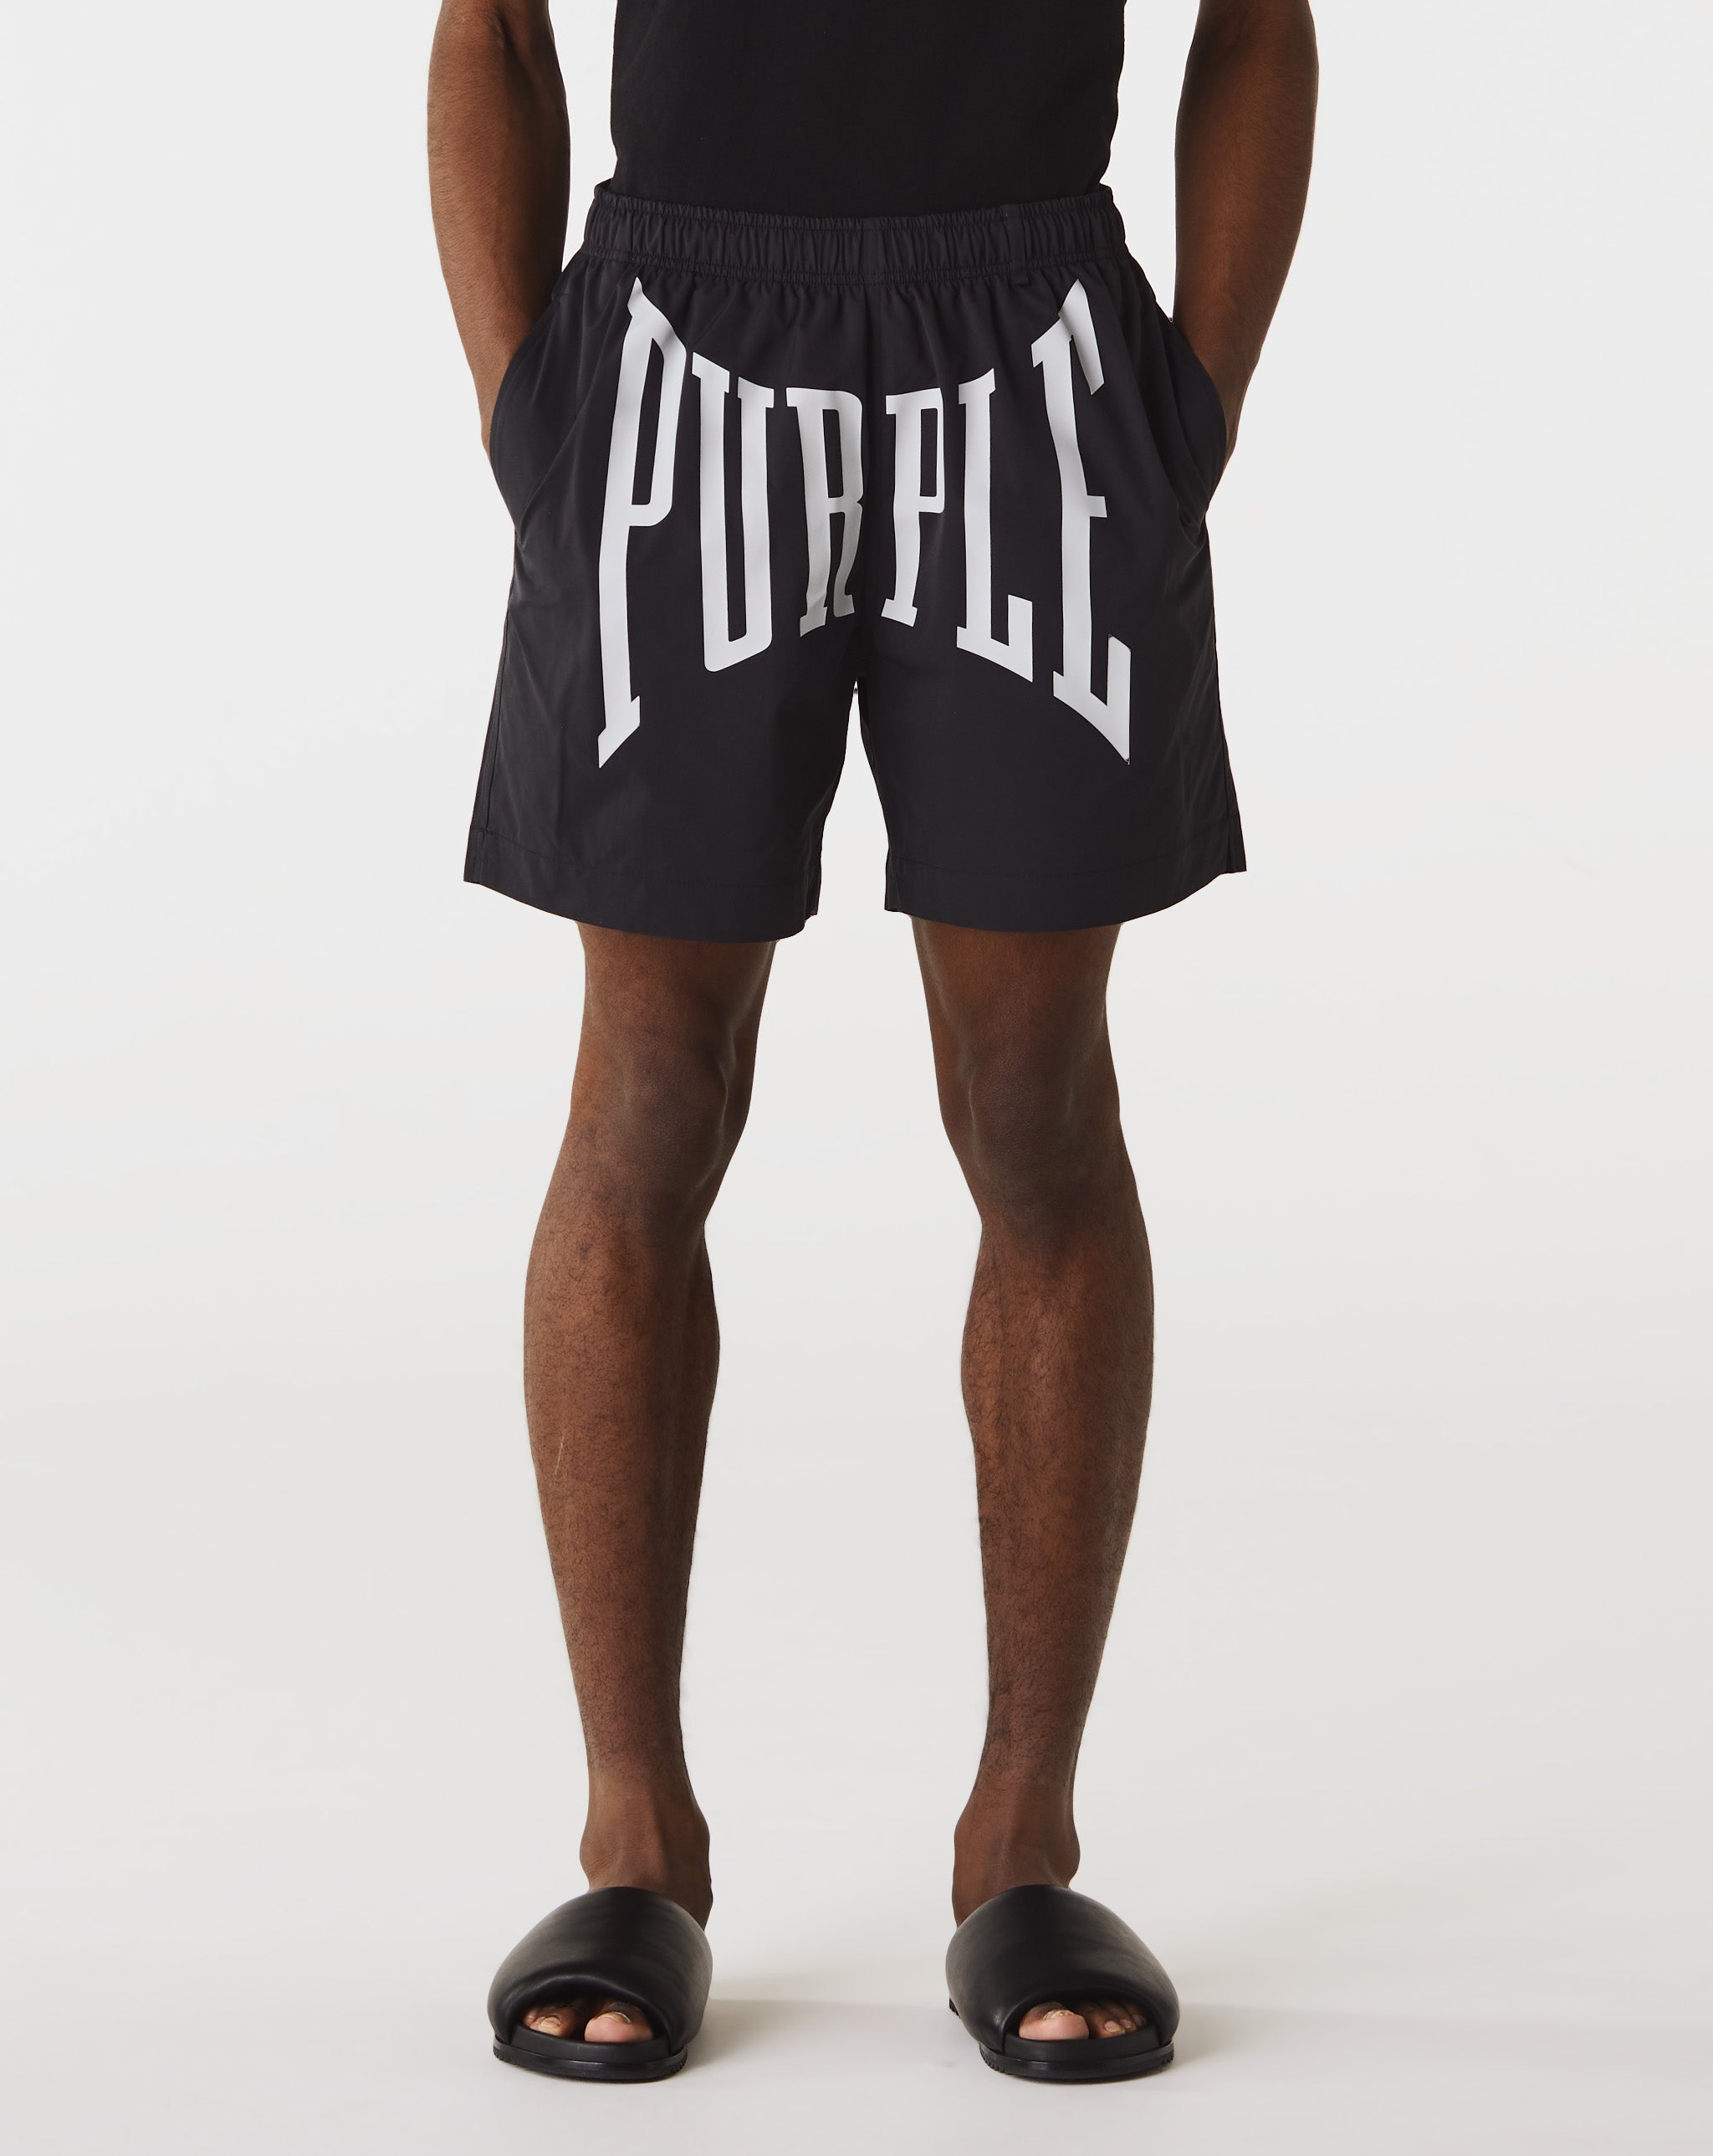 Purple Brand All Round Shorts  - Cheap Erlebniswelt-fliegenfischen Jordan outlet